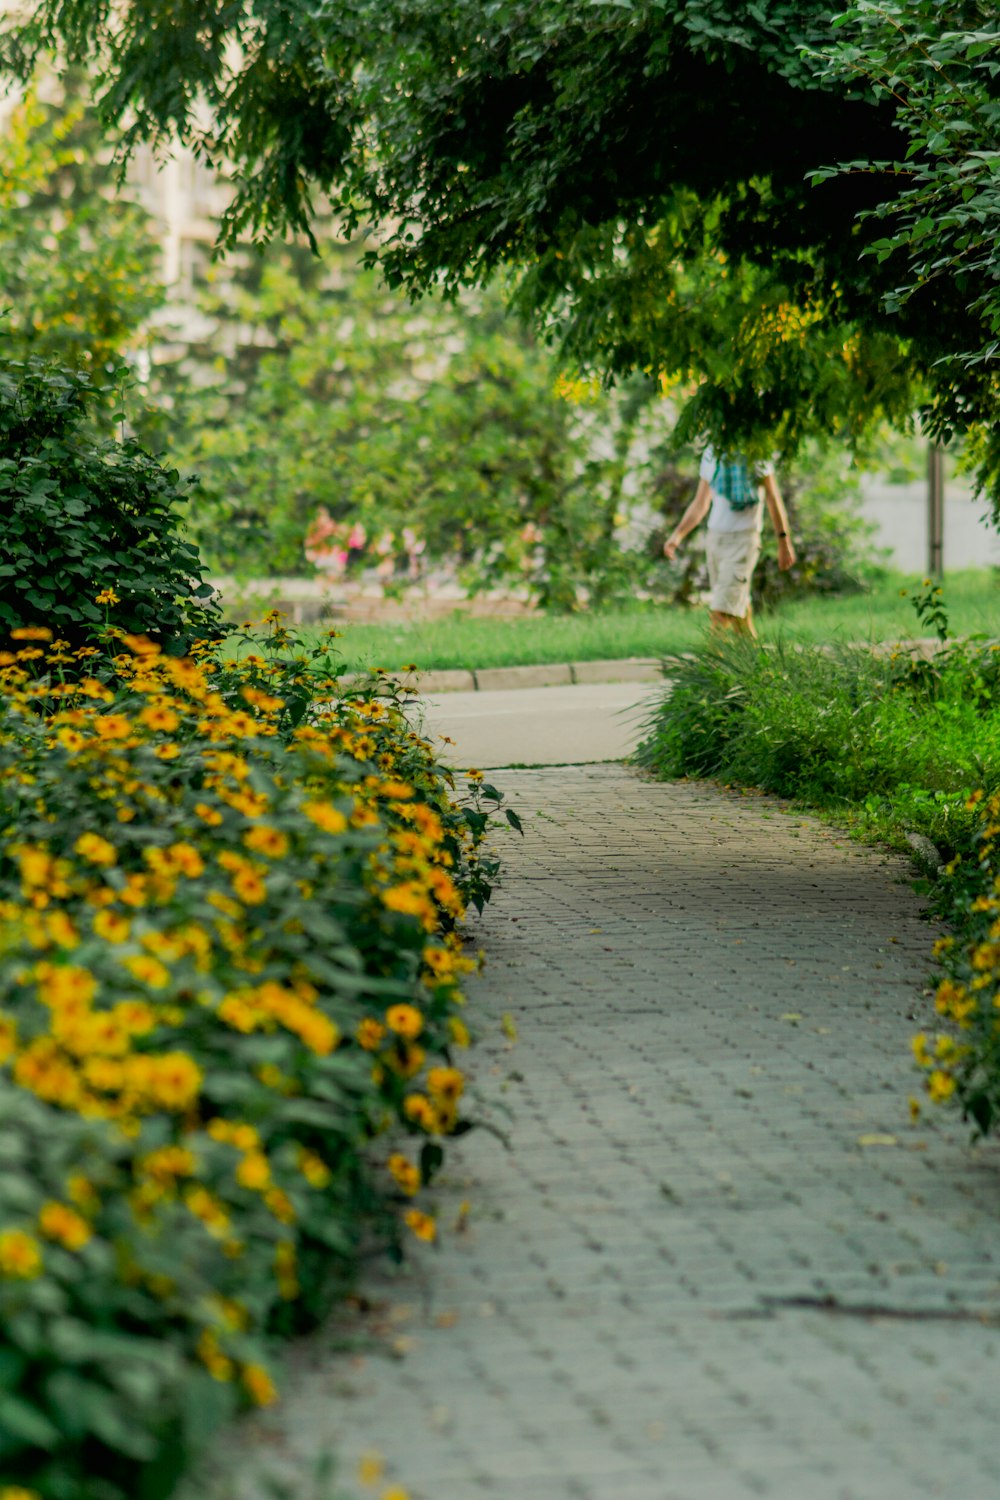 a man walking down a sidewalk next to yellow flowers